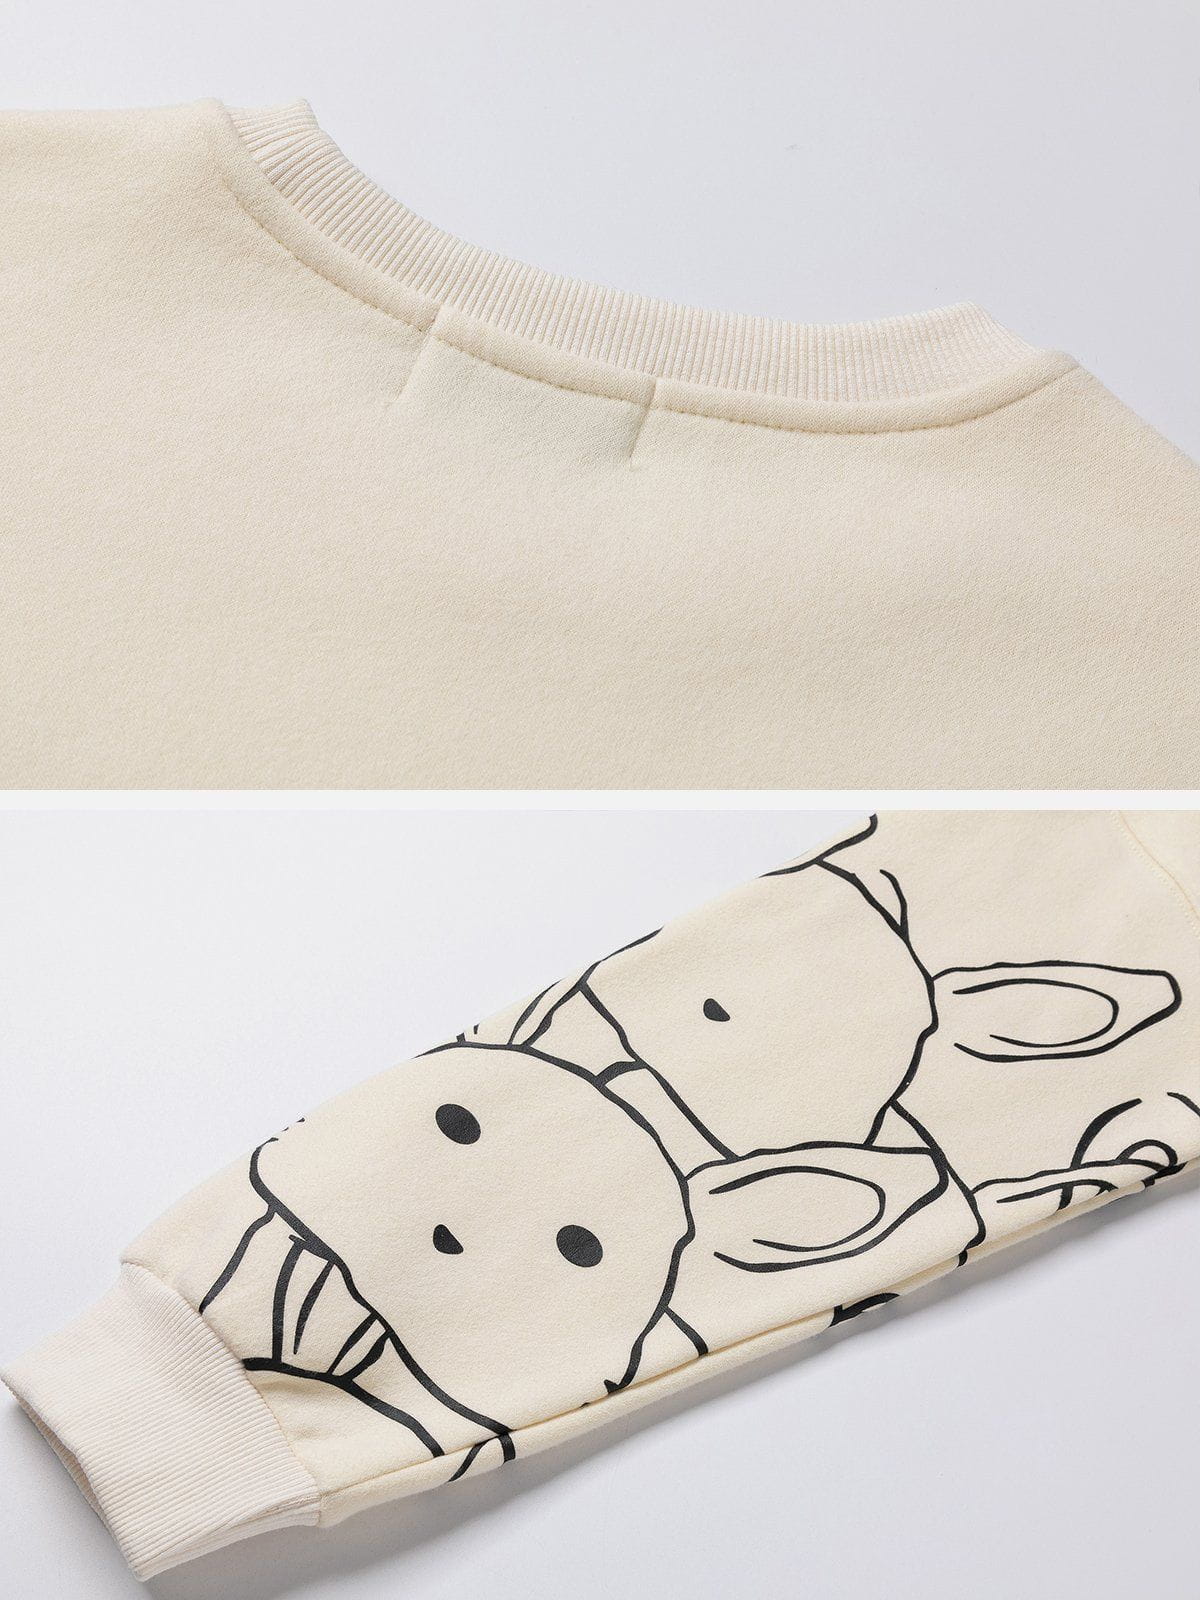 LUXENFY™ - Cartoon Stick Figure Rabbit Sweatshirt luxenfy.com